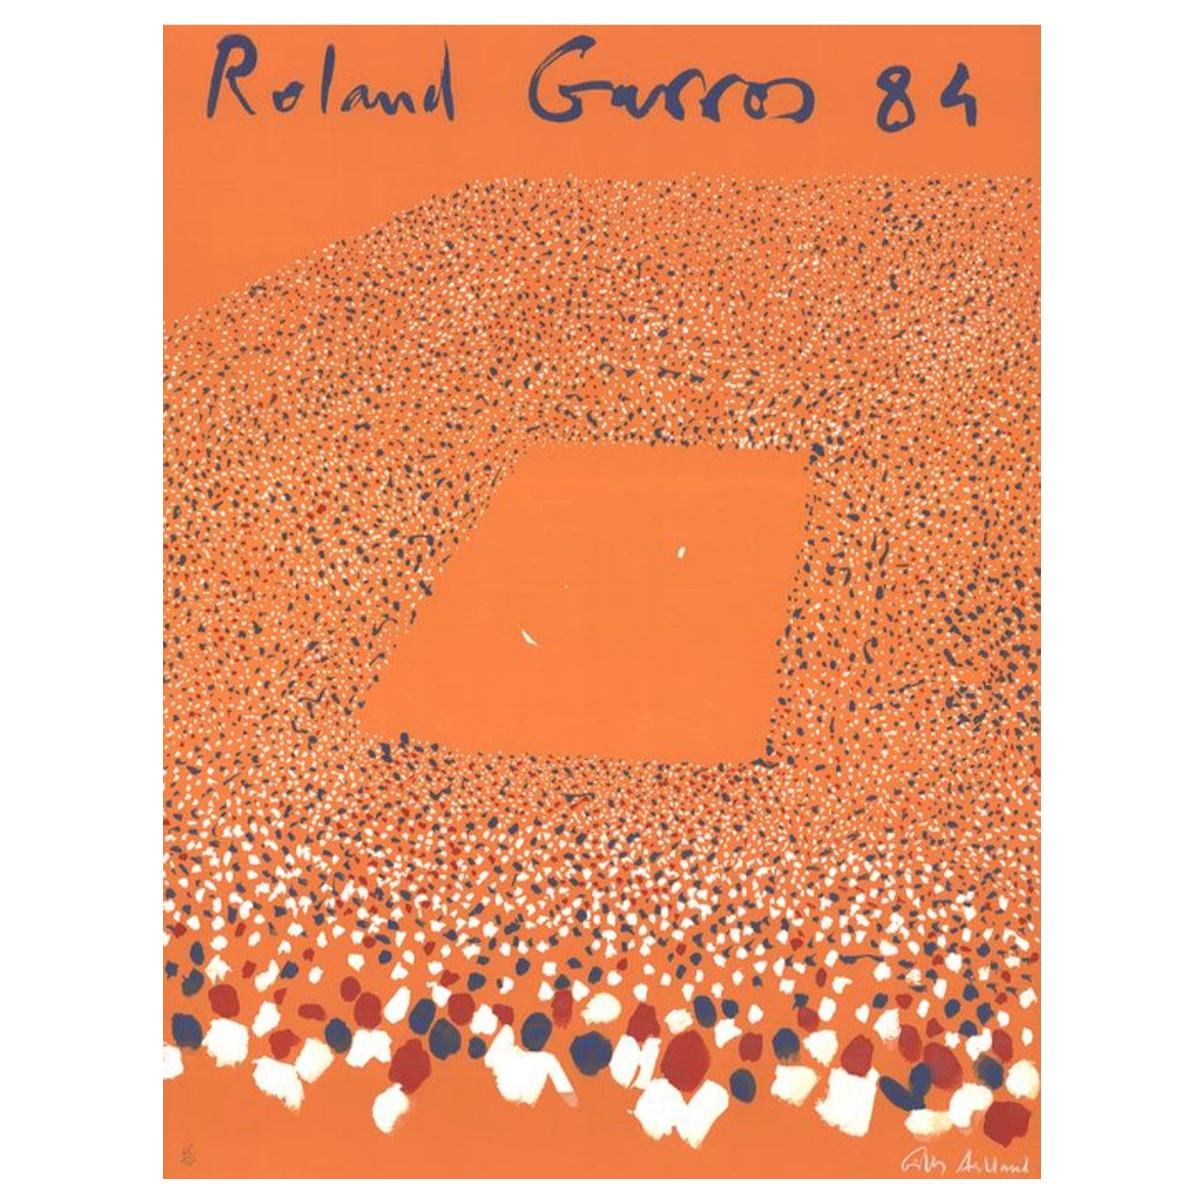 Original Lithograph 'ROLAND GARROS' 1984 Tennis Poster by Gilles-Aillaud